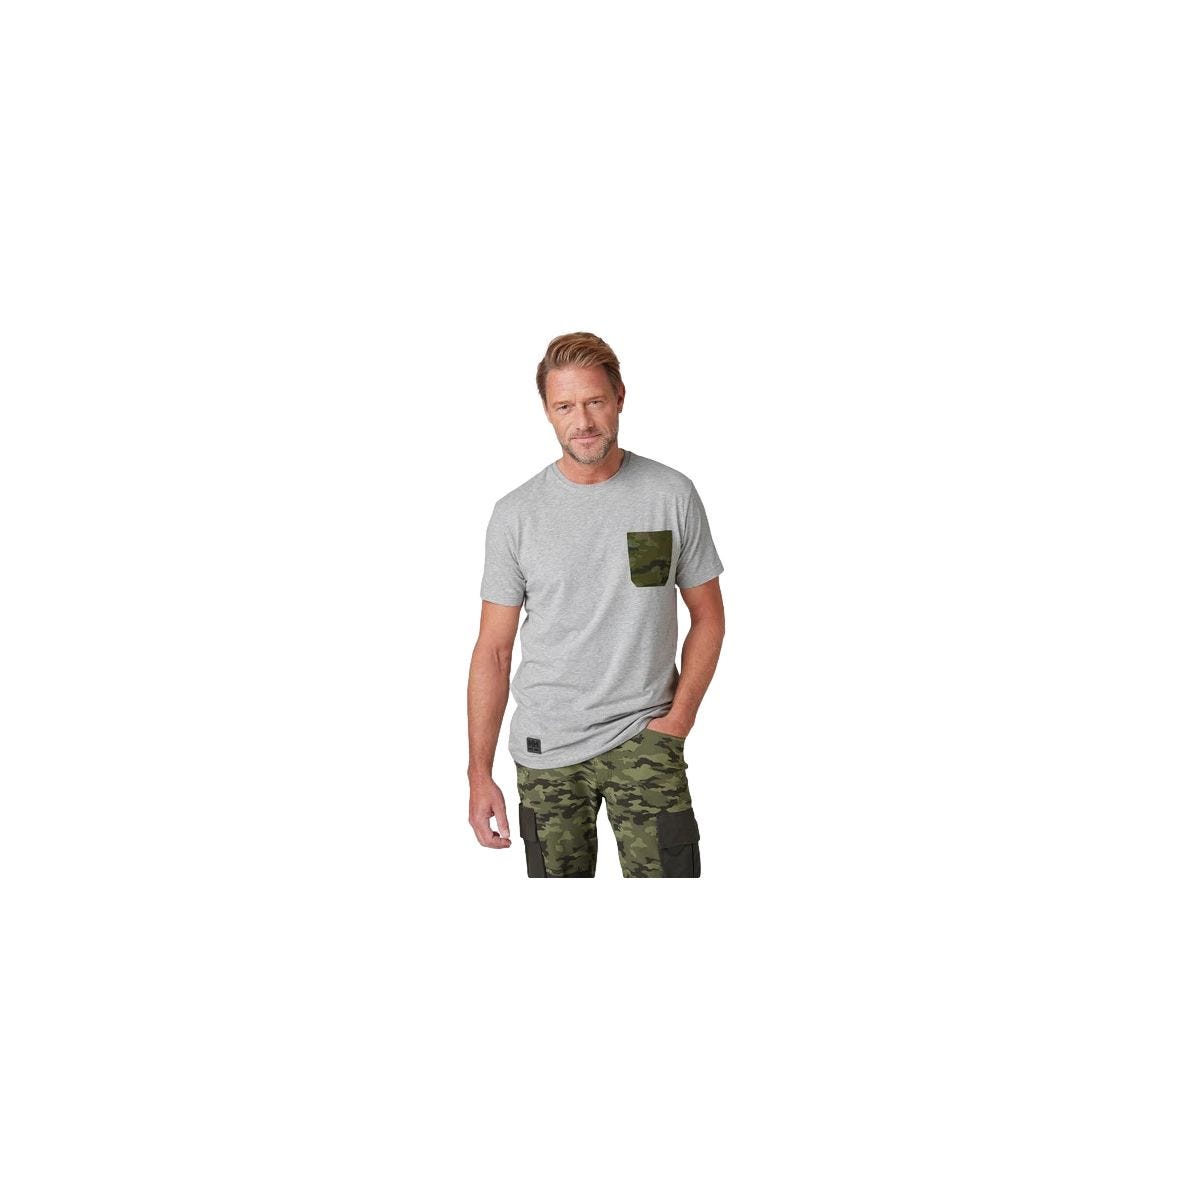 Tee-shirt Kensington Gris/Camo - Helly Hansen - Taille M 2